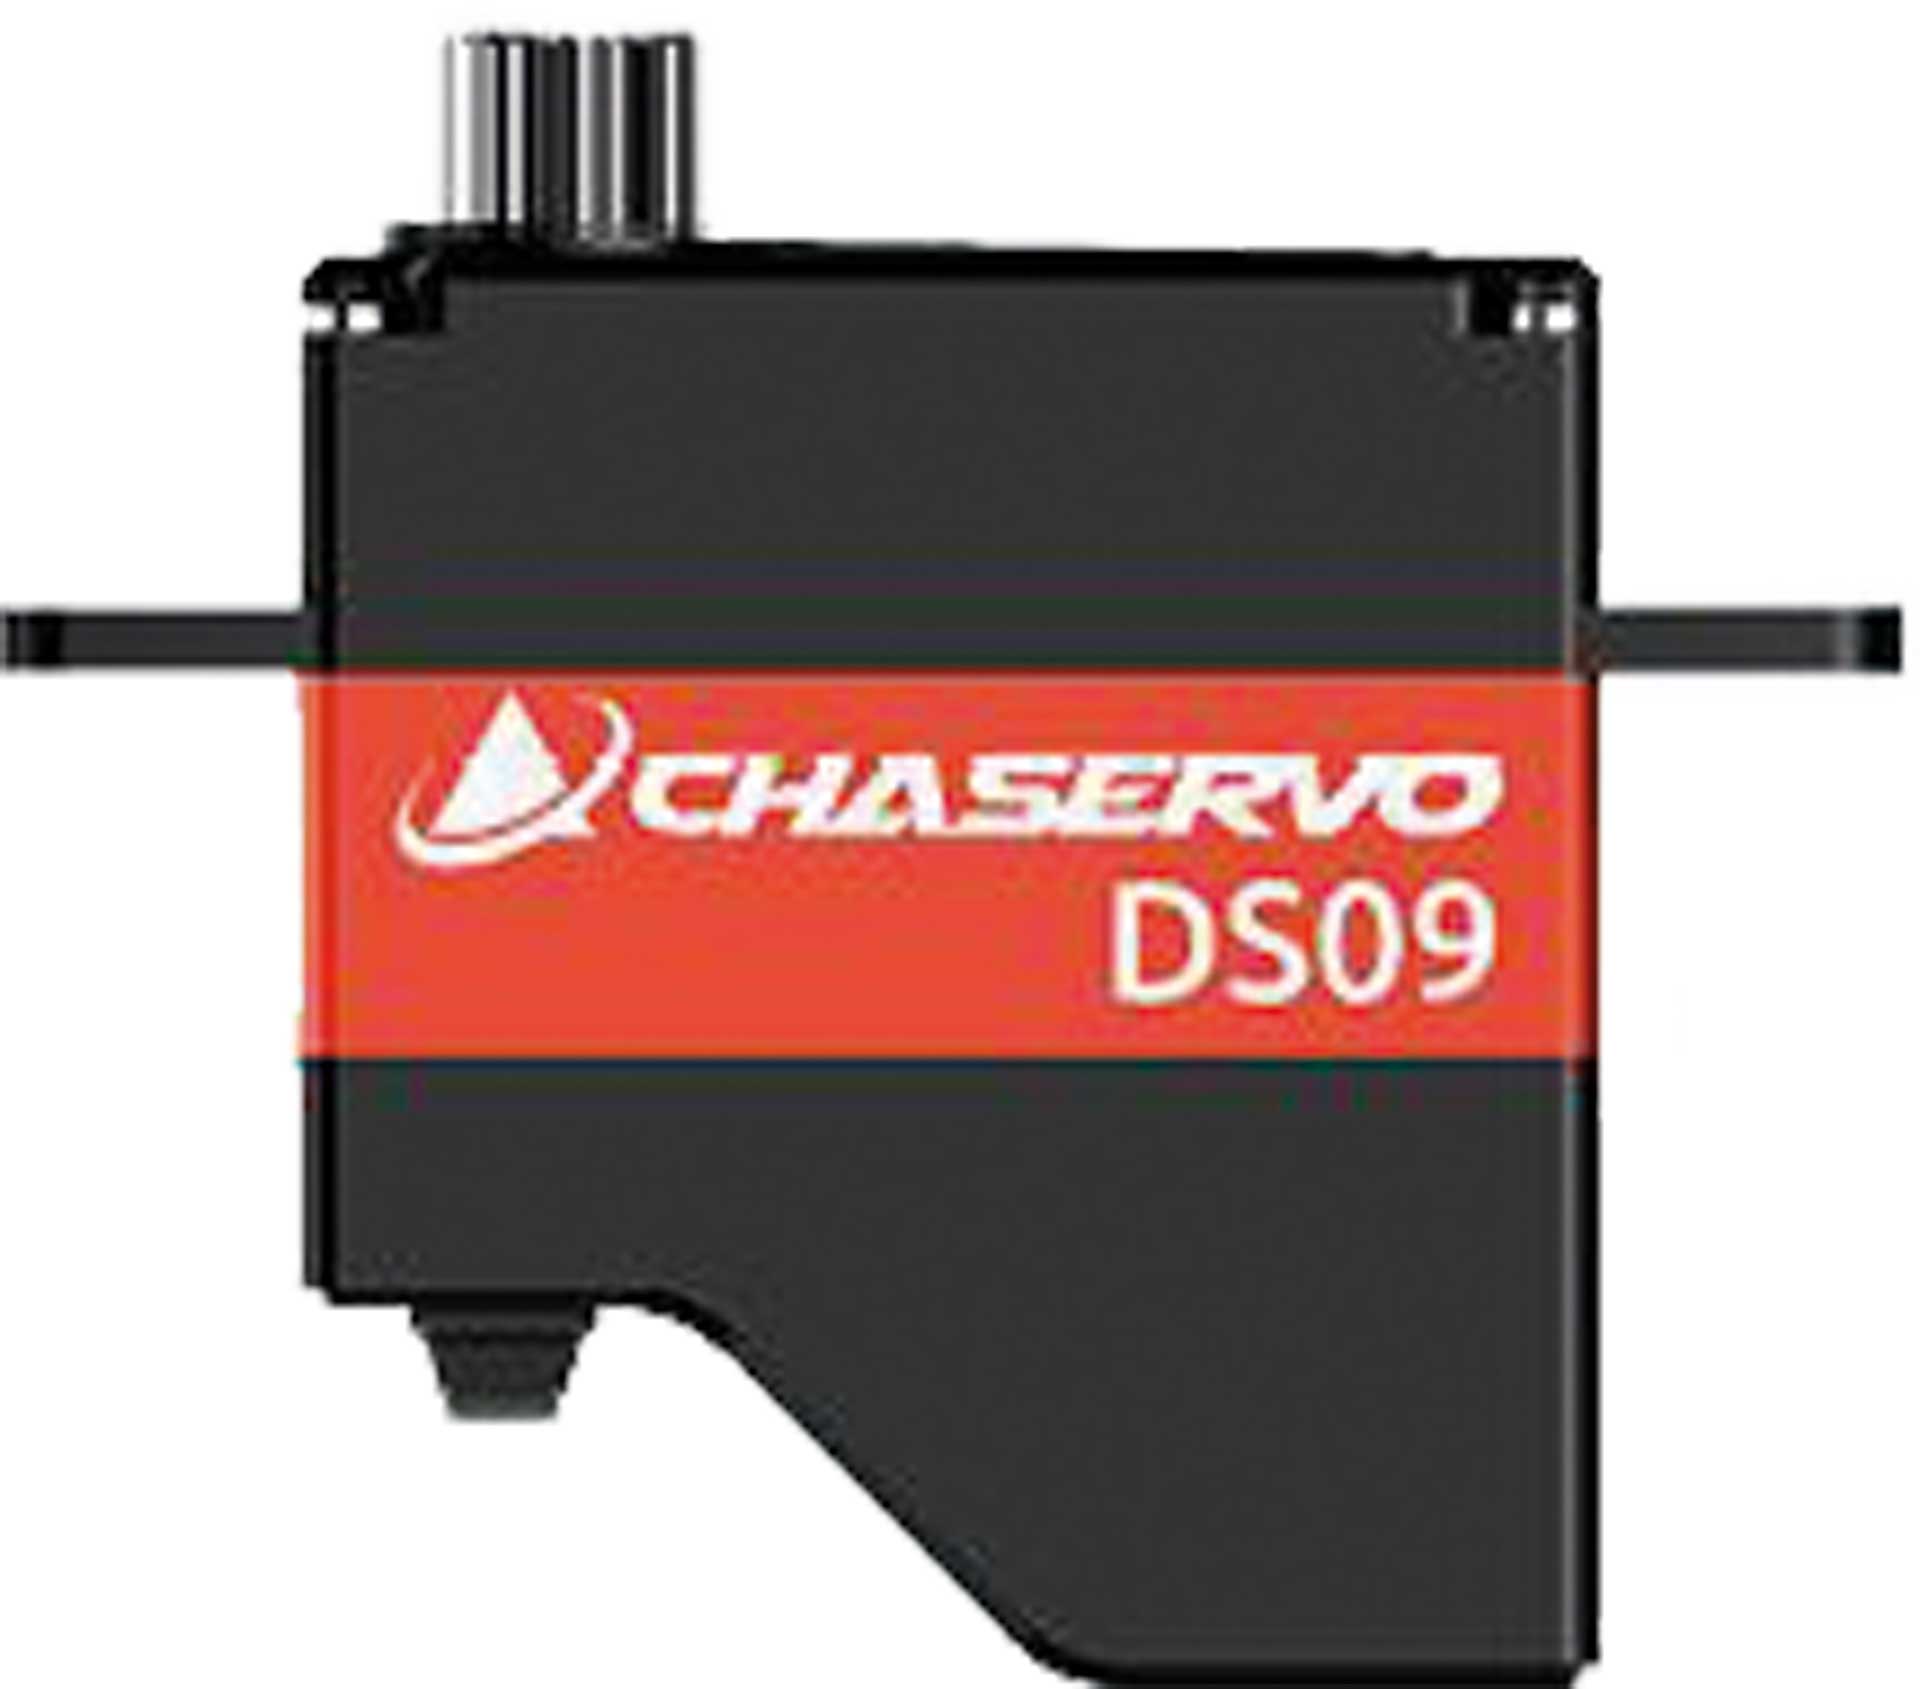 CHASERVO DS09 9mm HV servo 3.3-9.0V steel gearbox